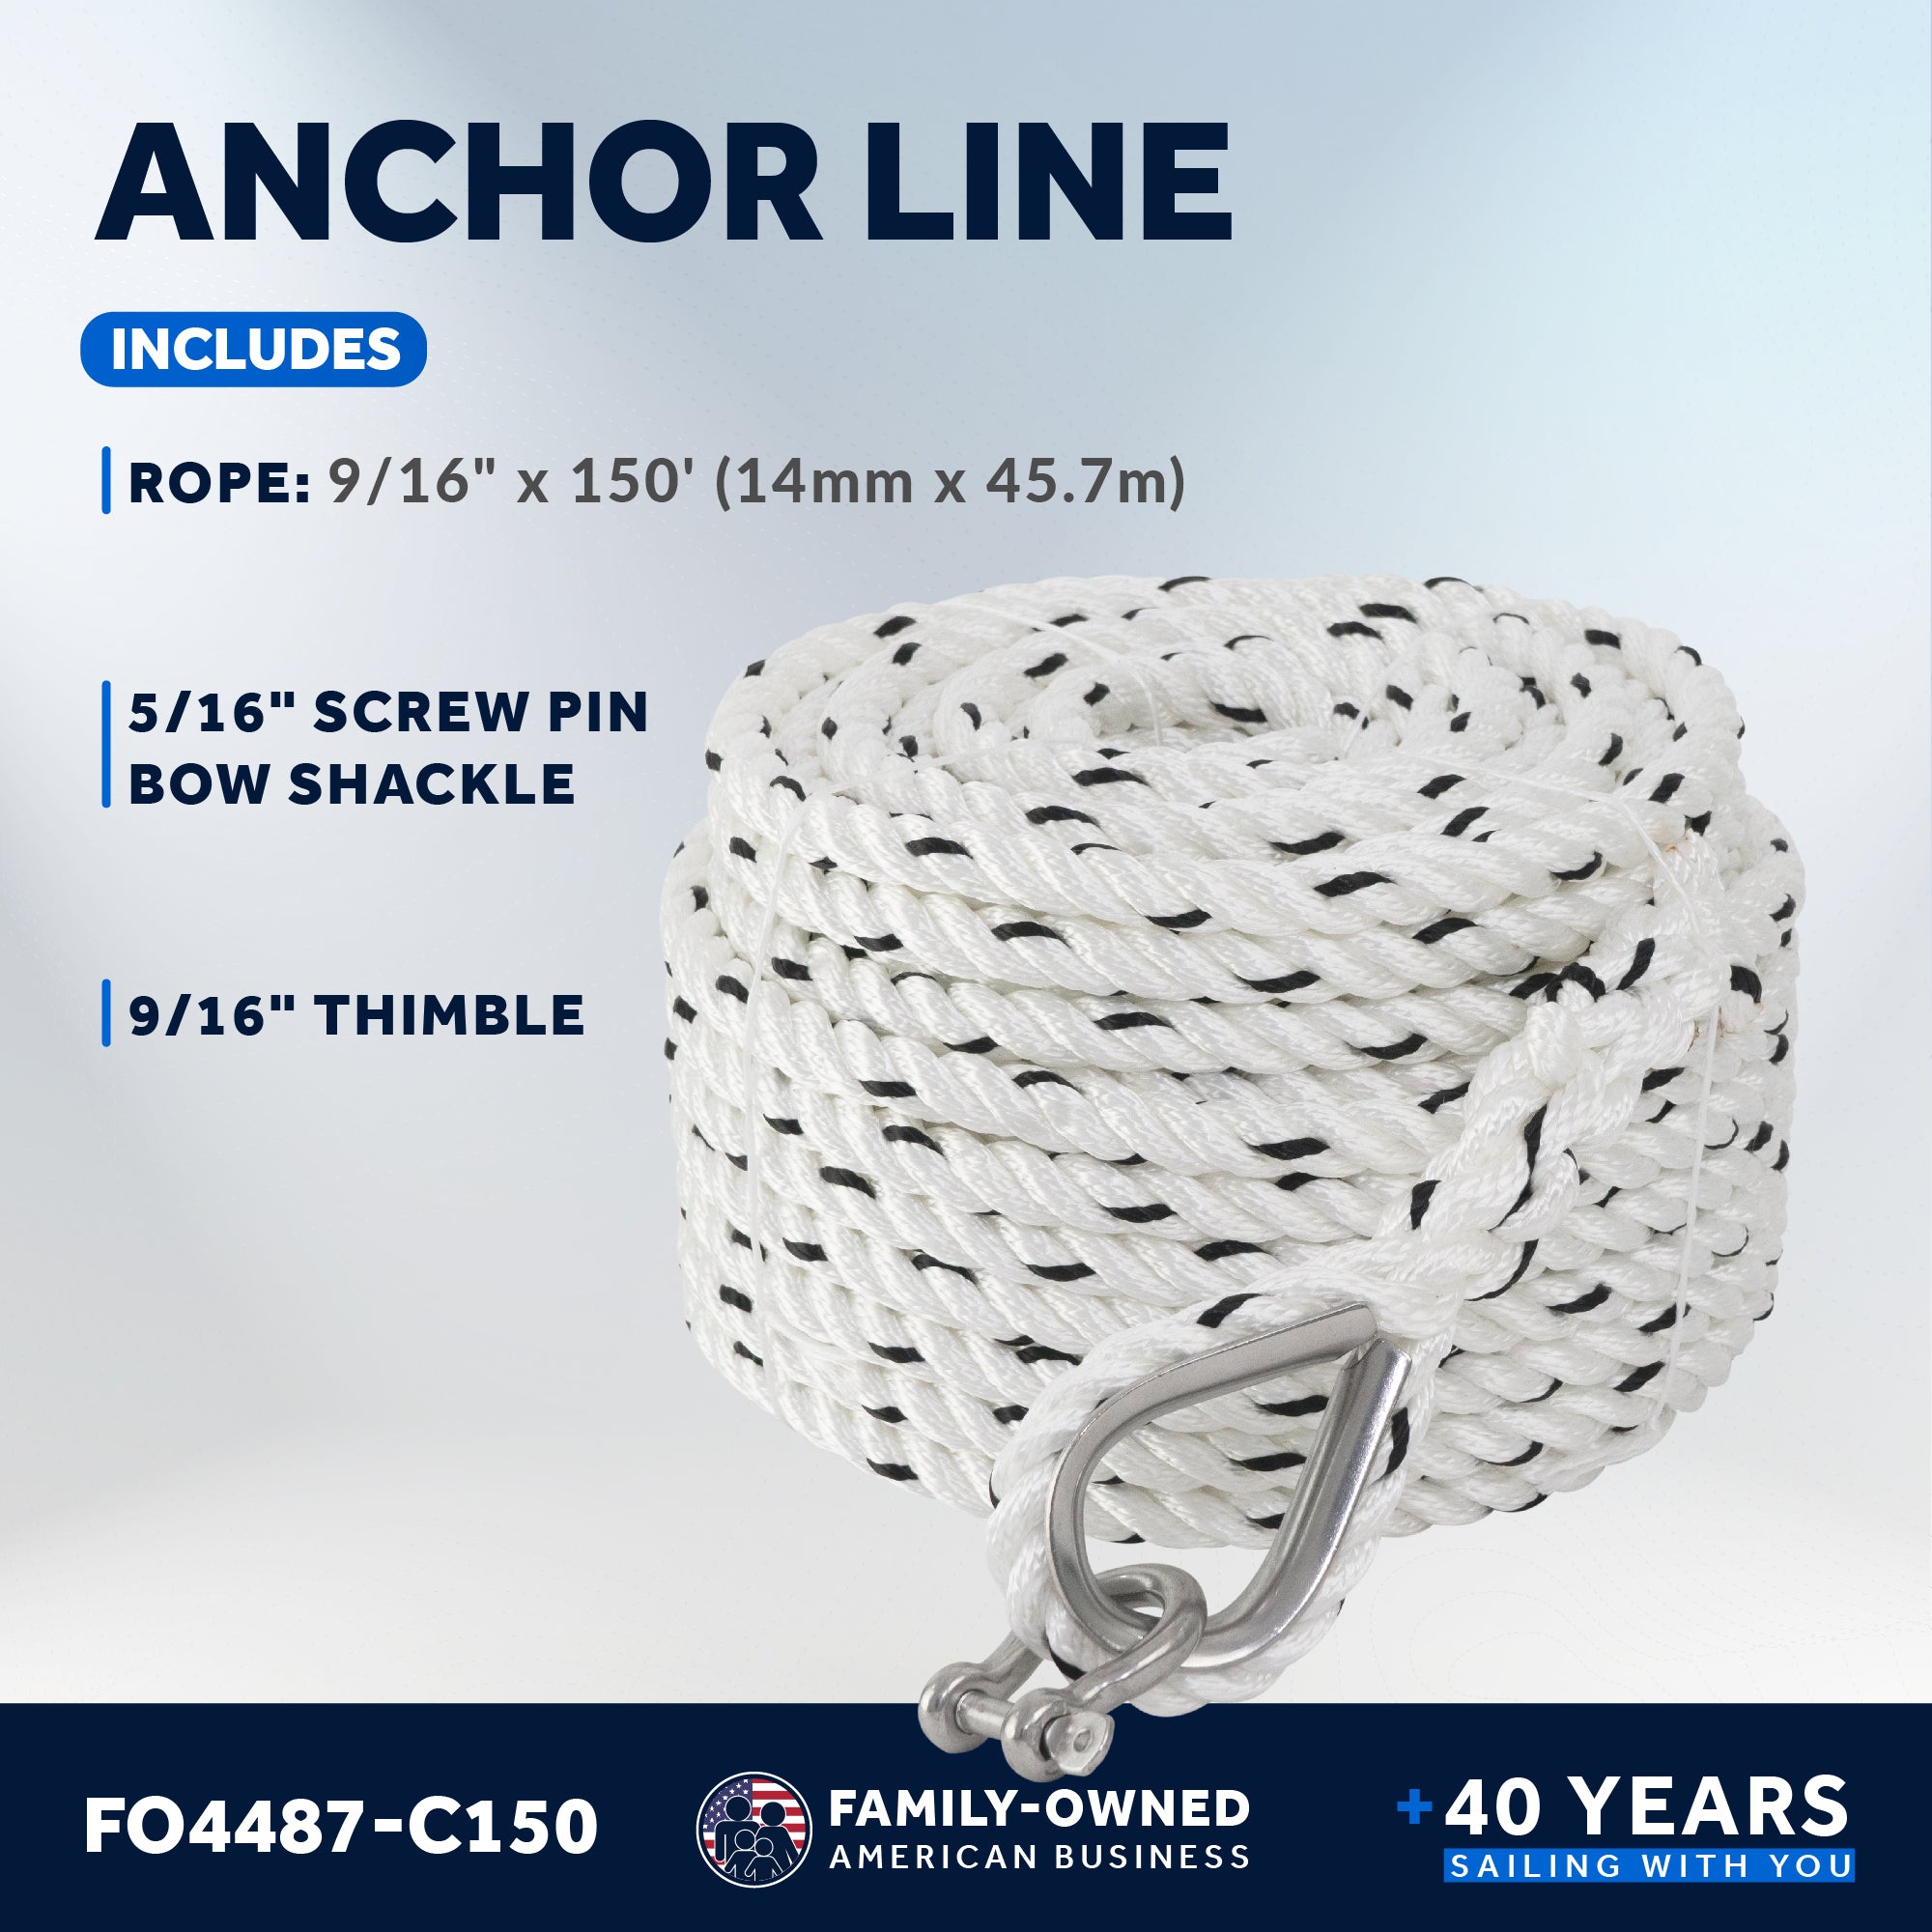 Anchor Line 9/16" x 150', 3-Strand Nylon, Spliced - FO4487-C150